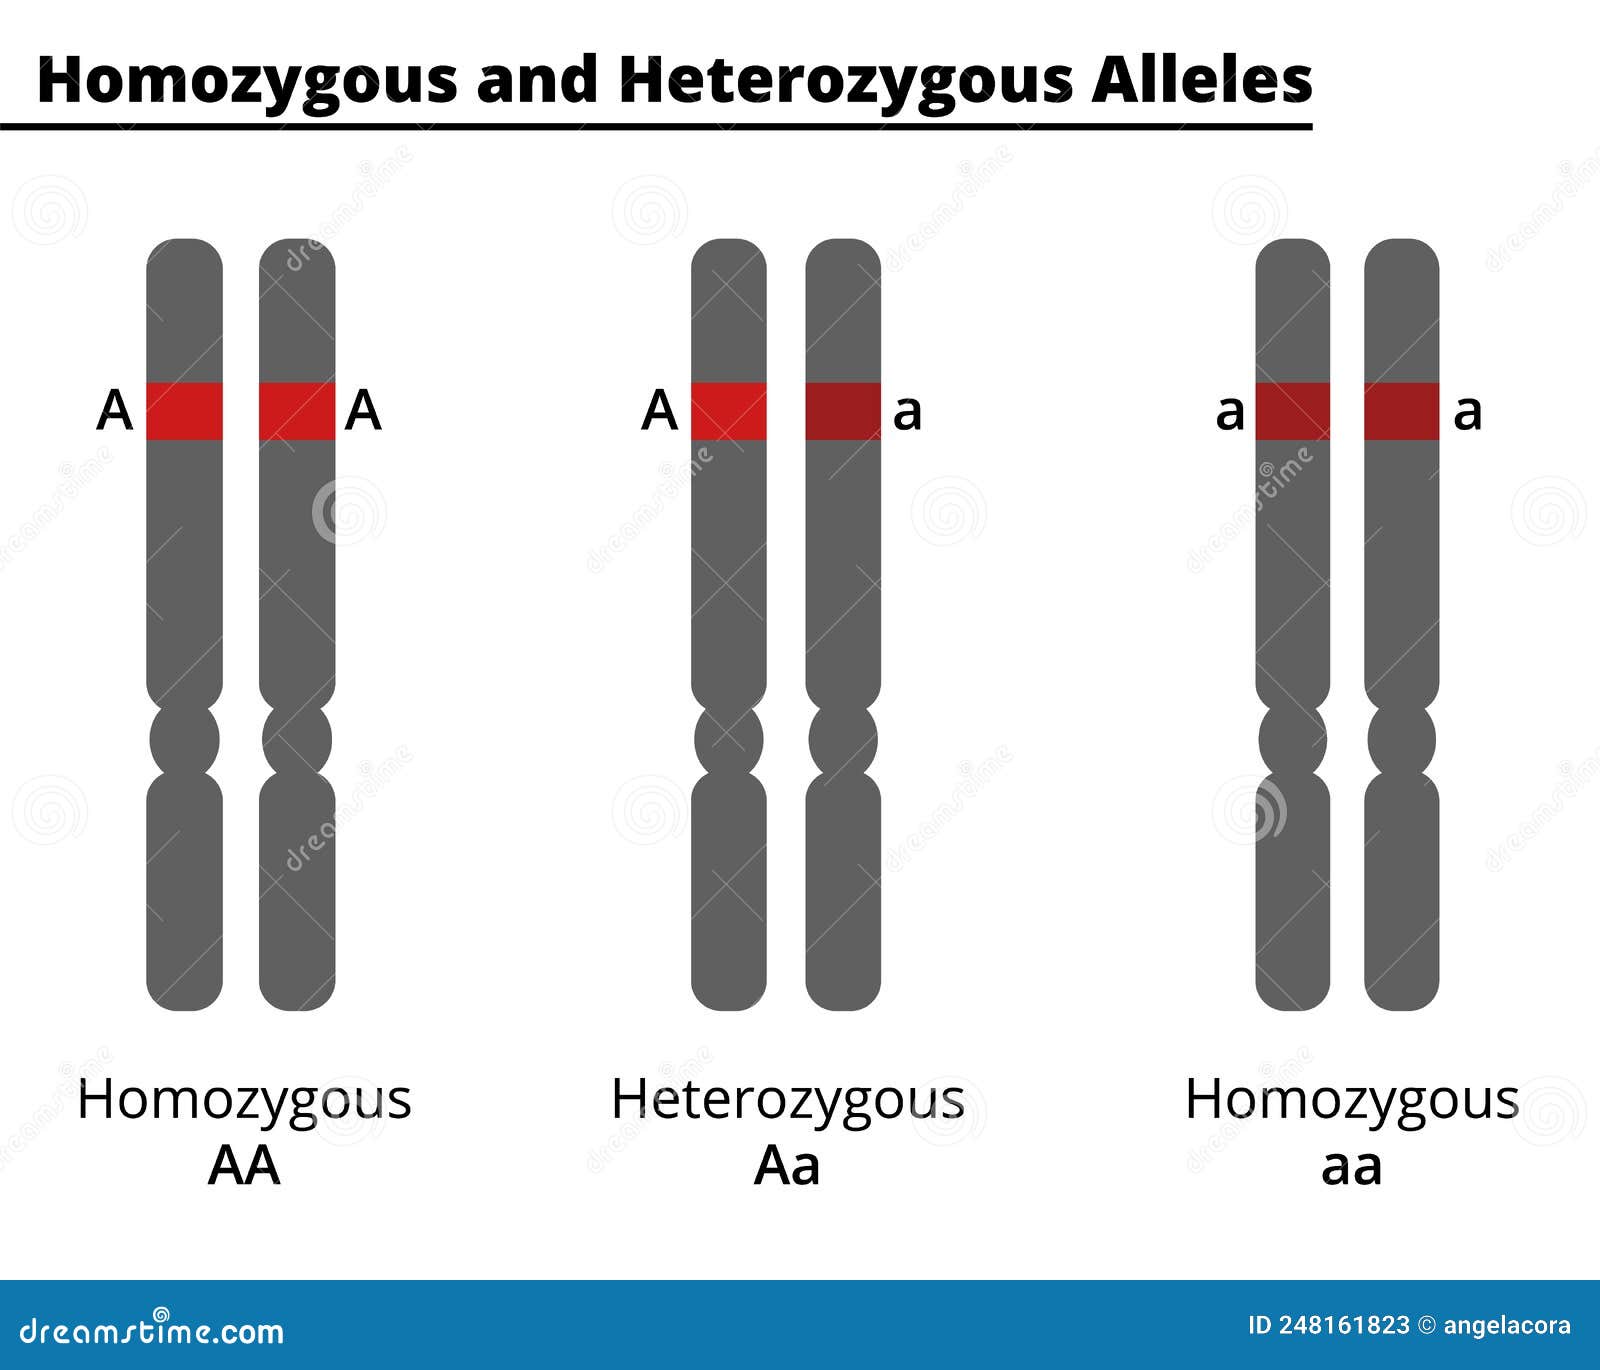 difference between homozygous and heterozygous alleles.